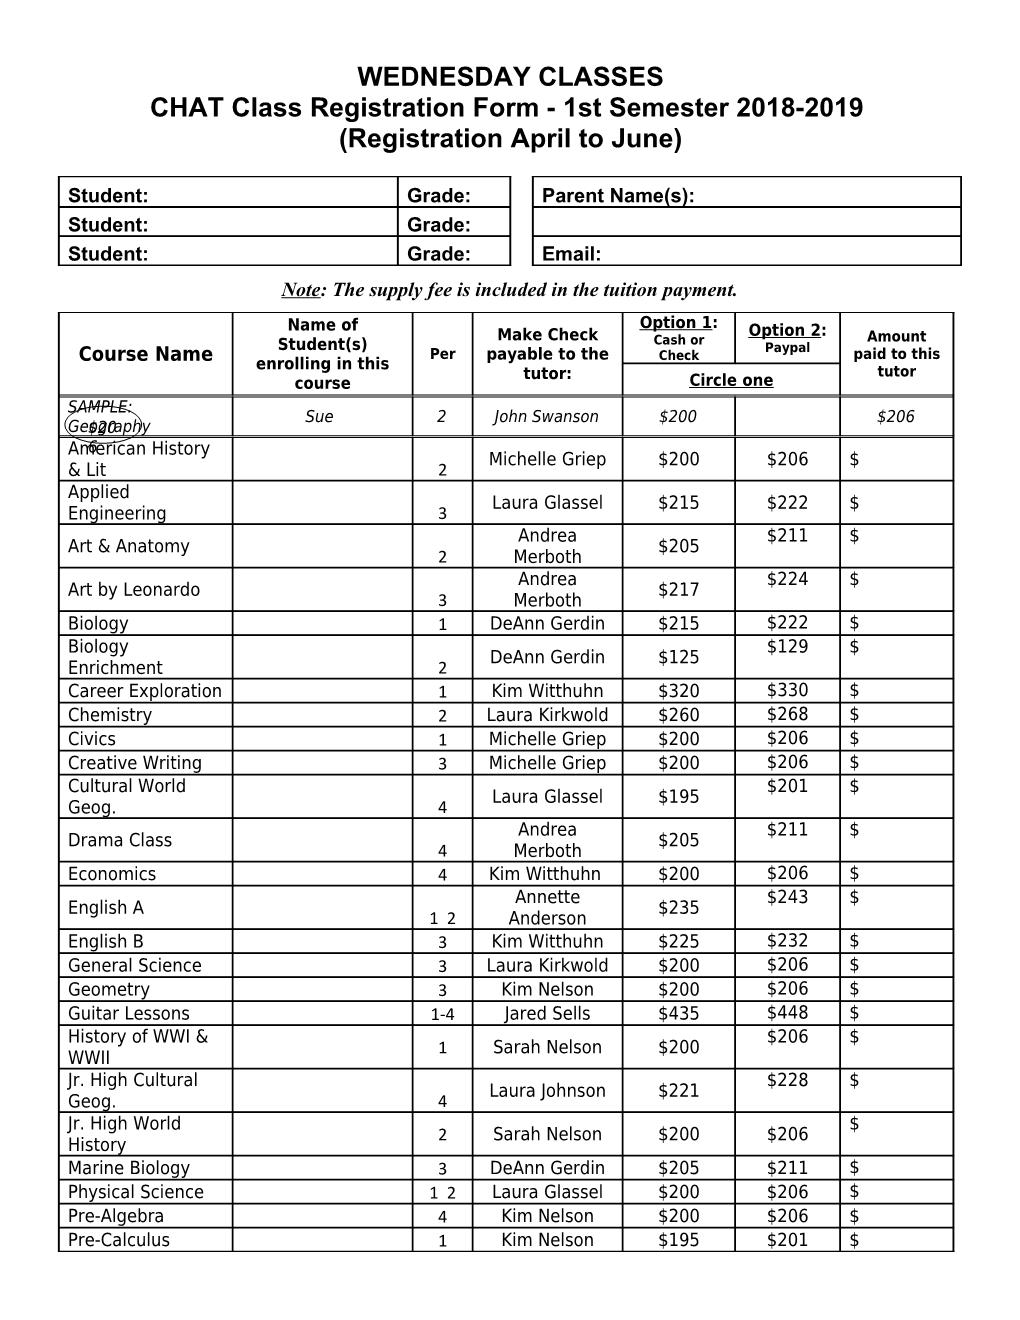 CHAT Class Registration Form - 1St Semester 2018-2019